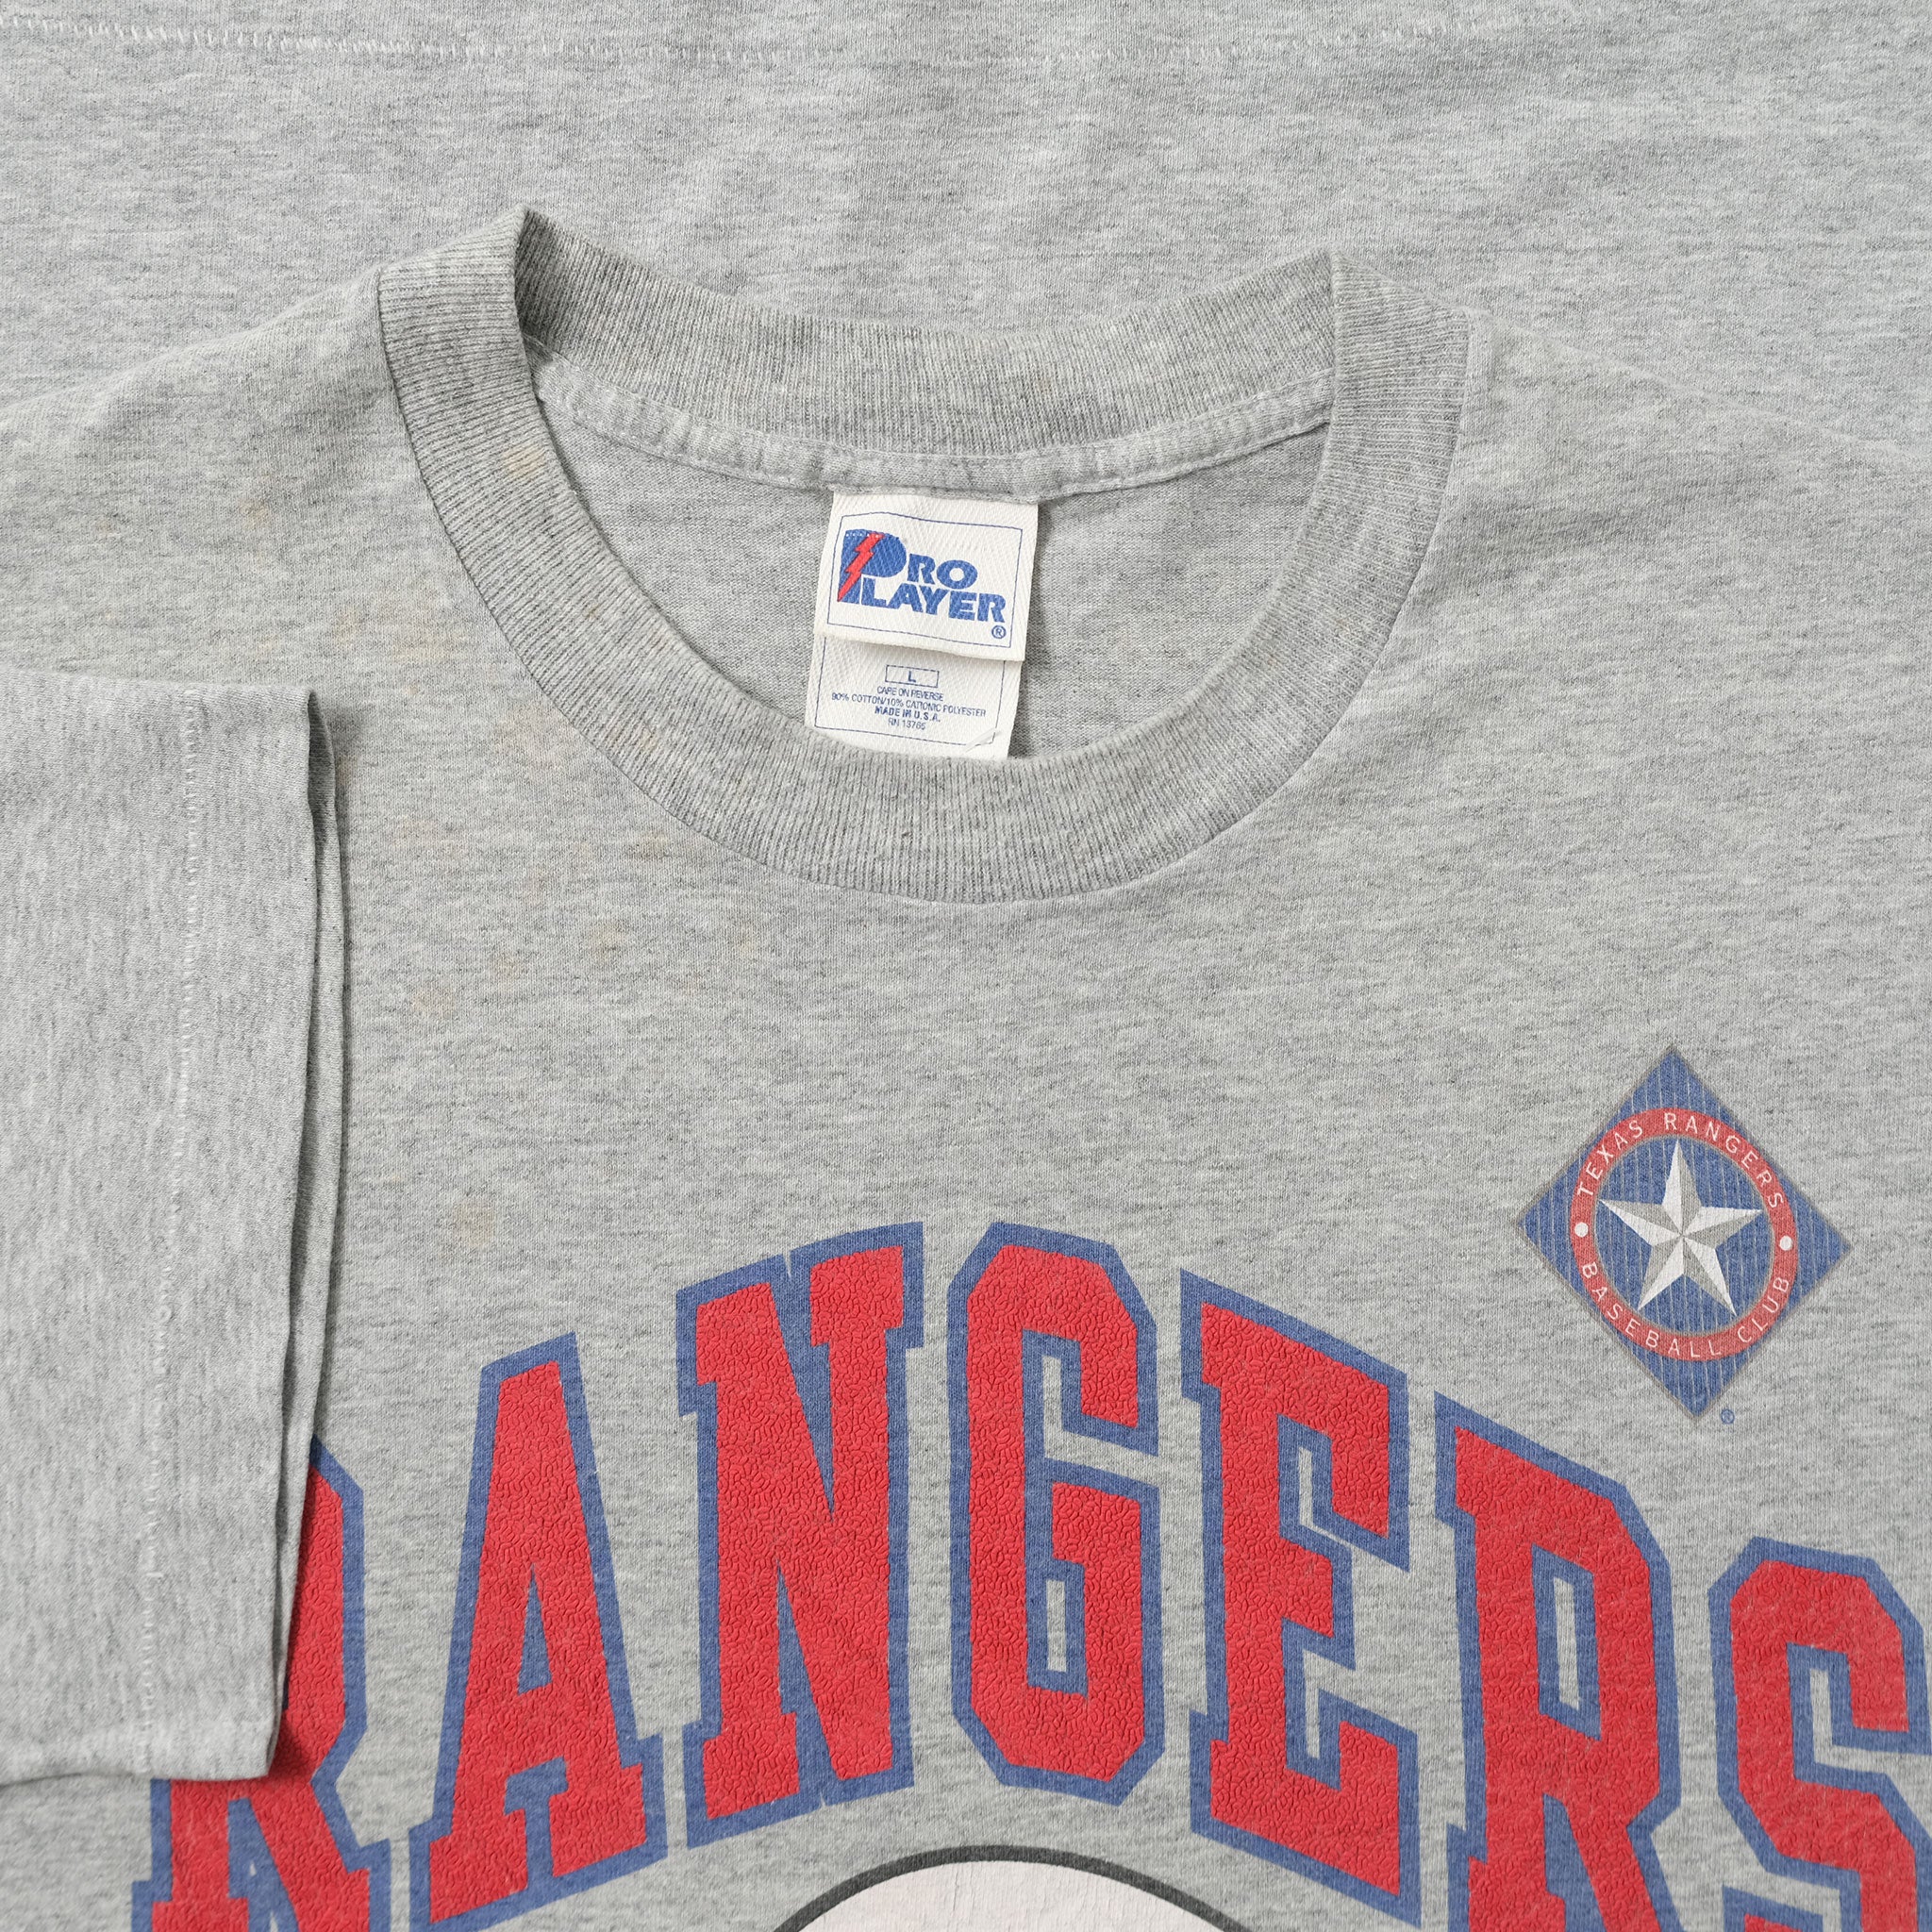 Texas Rangers Est 1961 T-Shirt, Vintage Texas Rangers Shirt, MLB